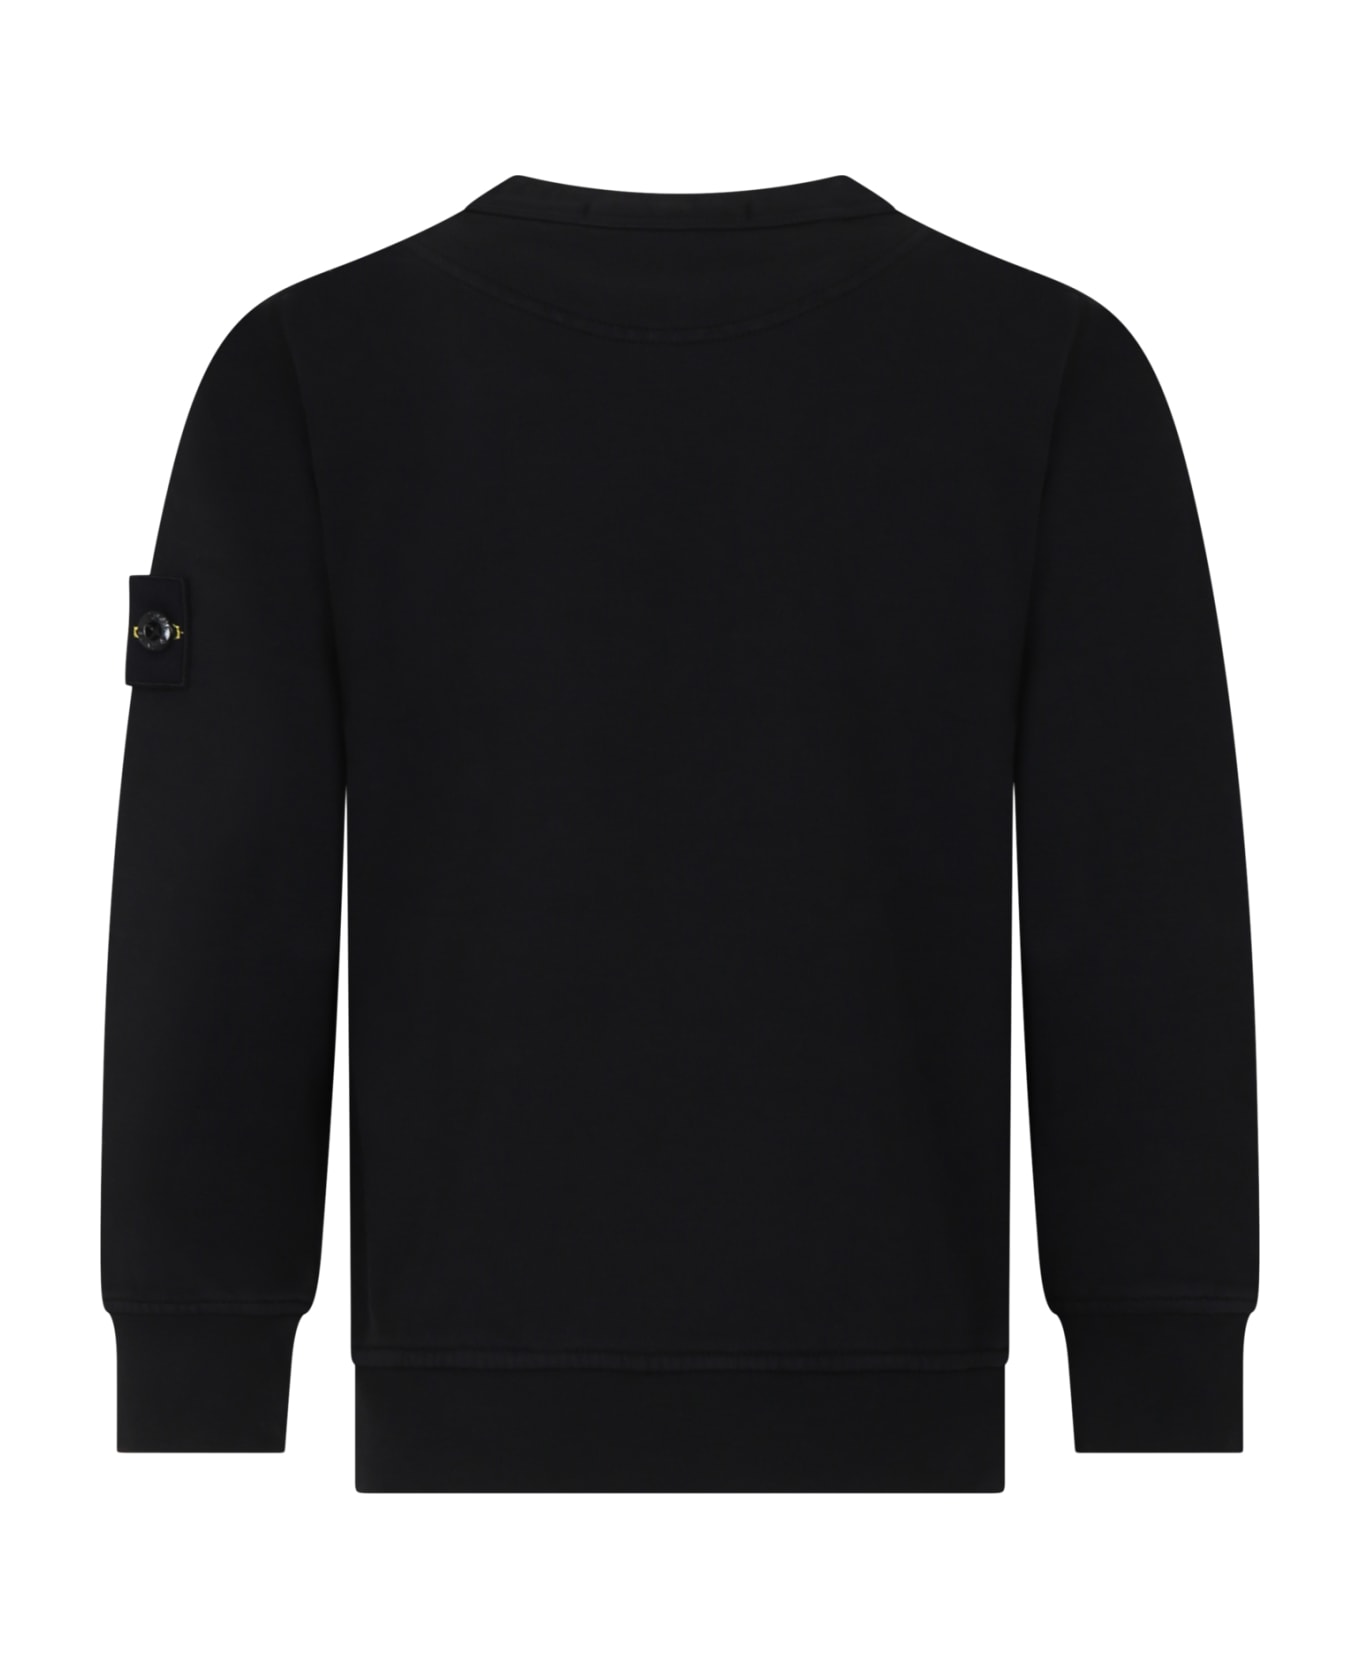 Stone Island Junior Black Sweatshirt For Boy With Iconic Logo - Black